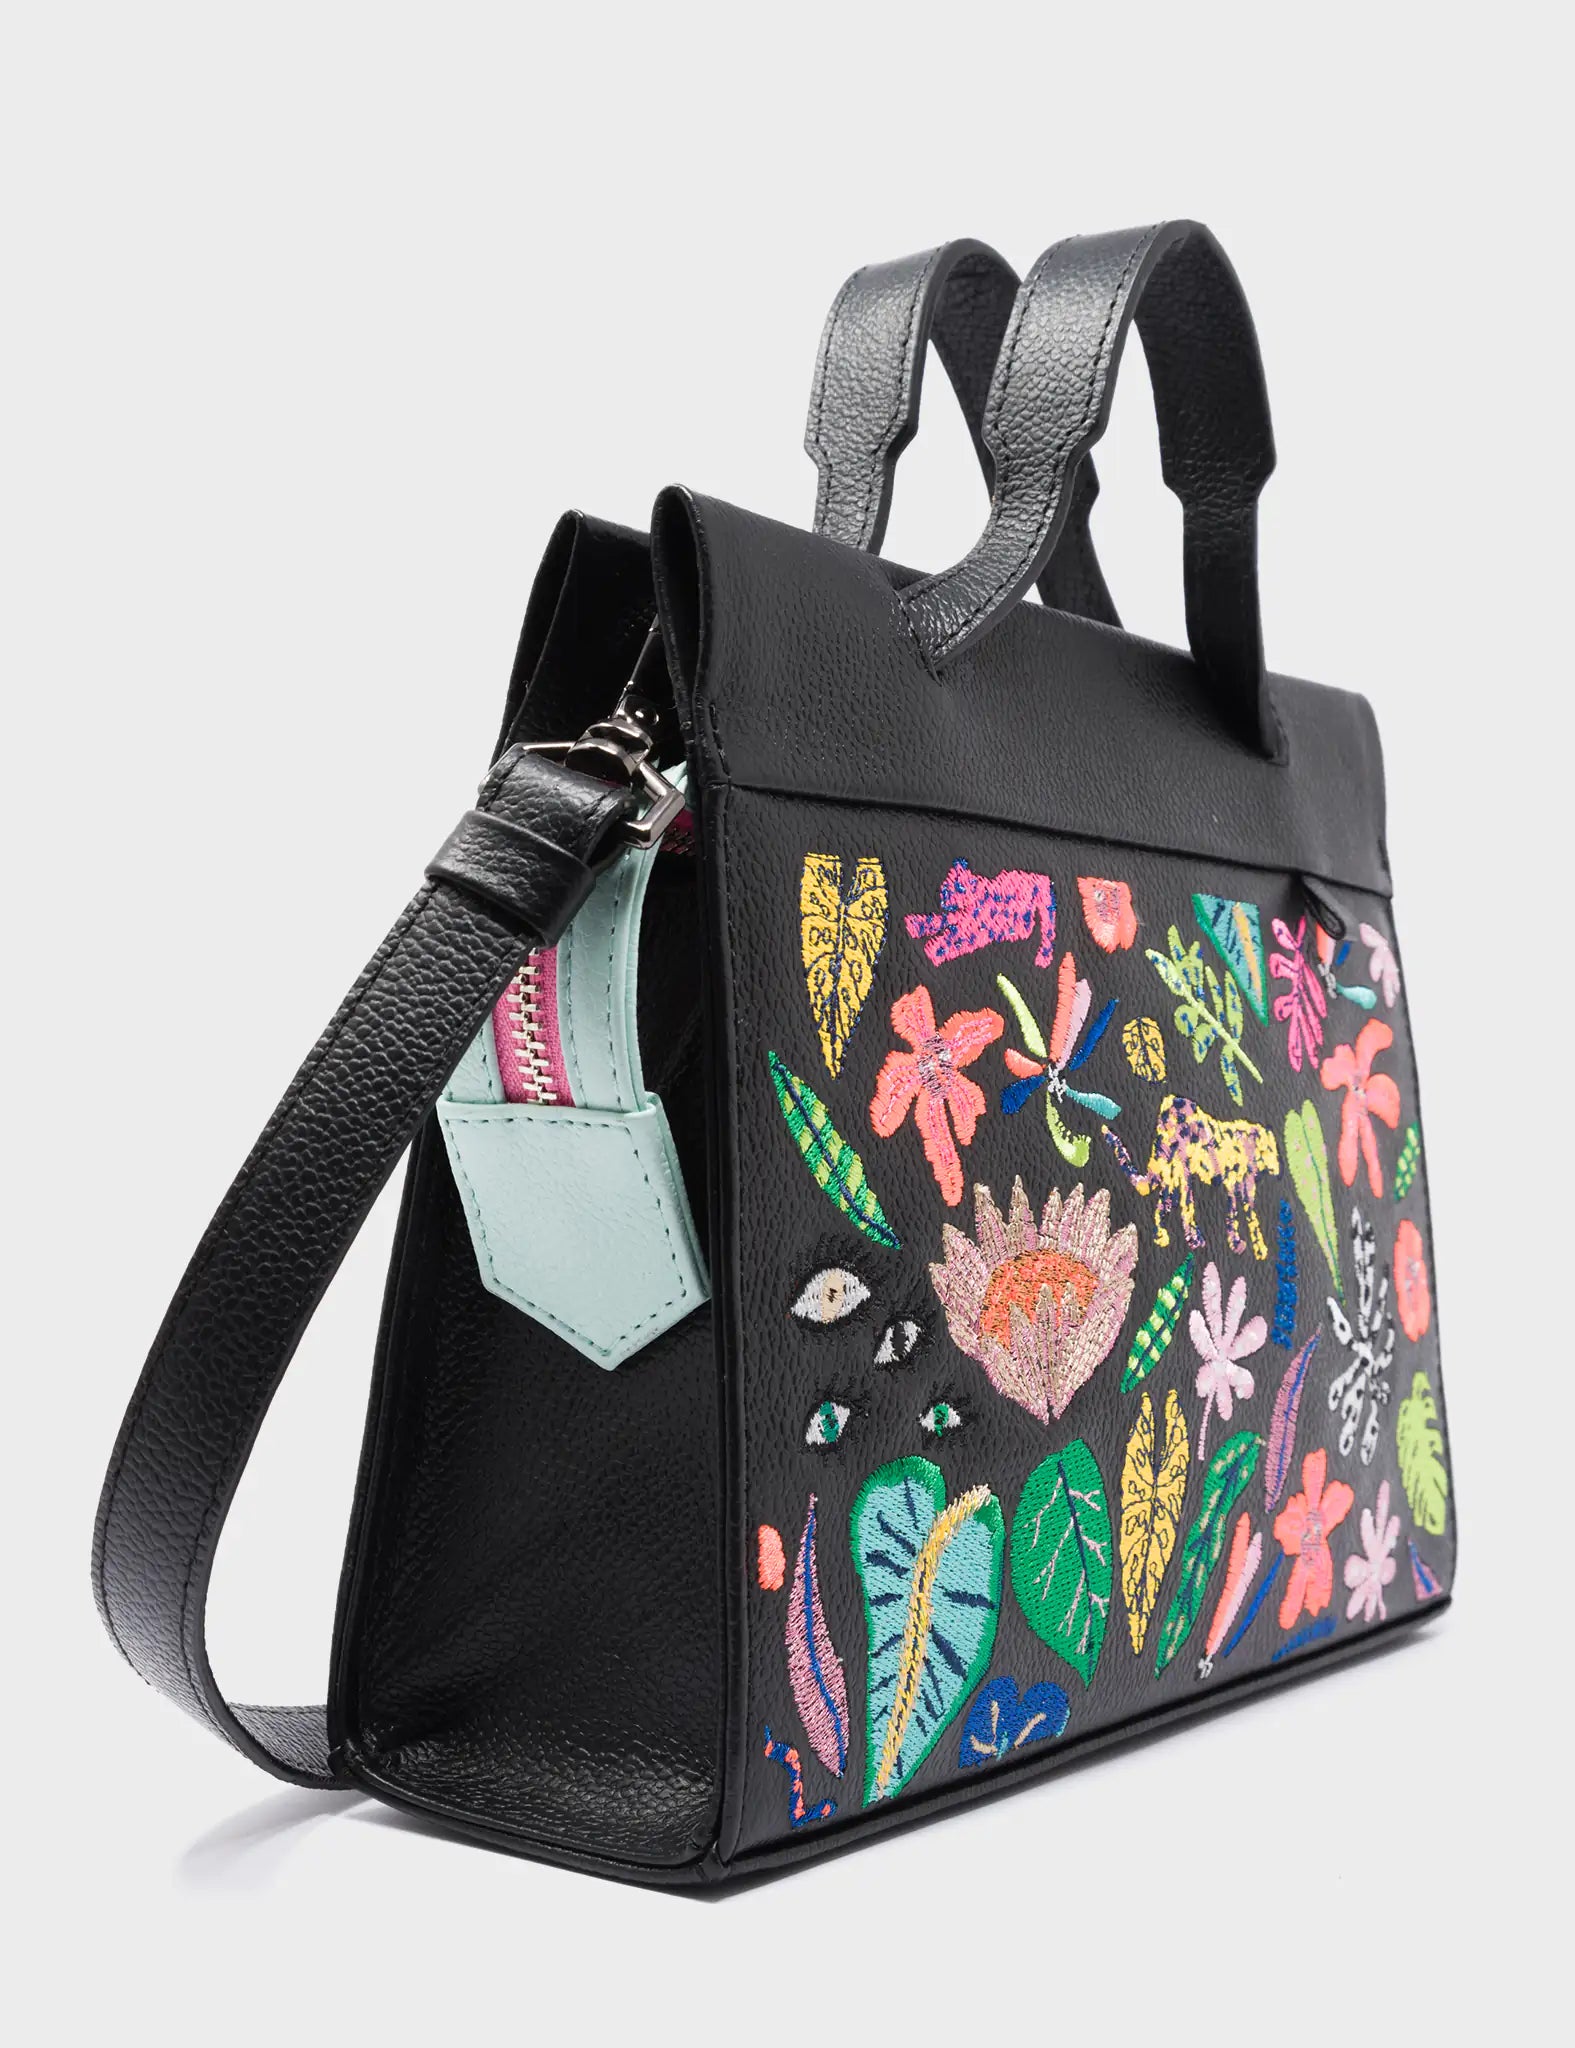 Vali Crossbody Small Black Leather Bag - El Tropico Print and Embroidery Design - Side 